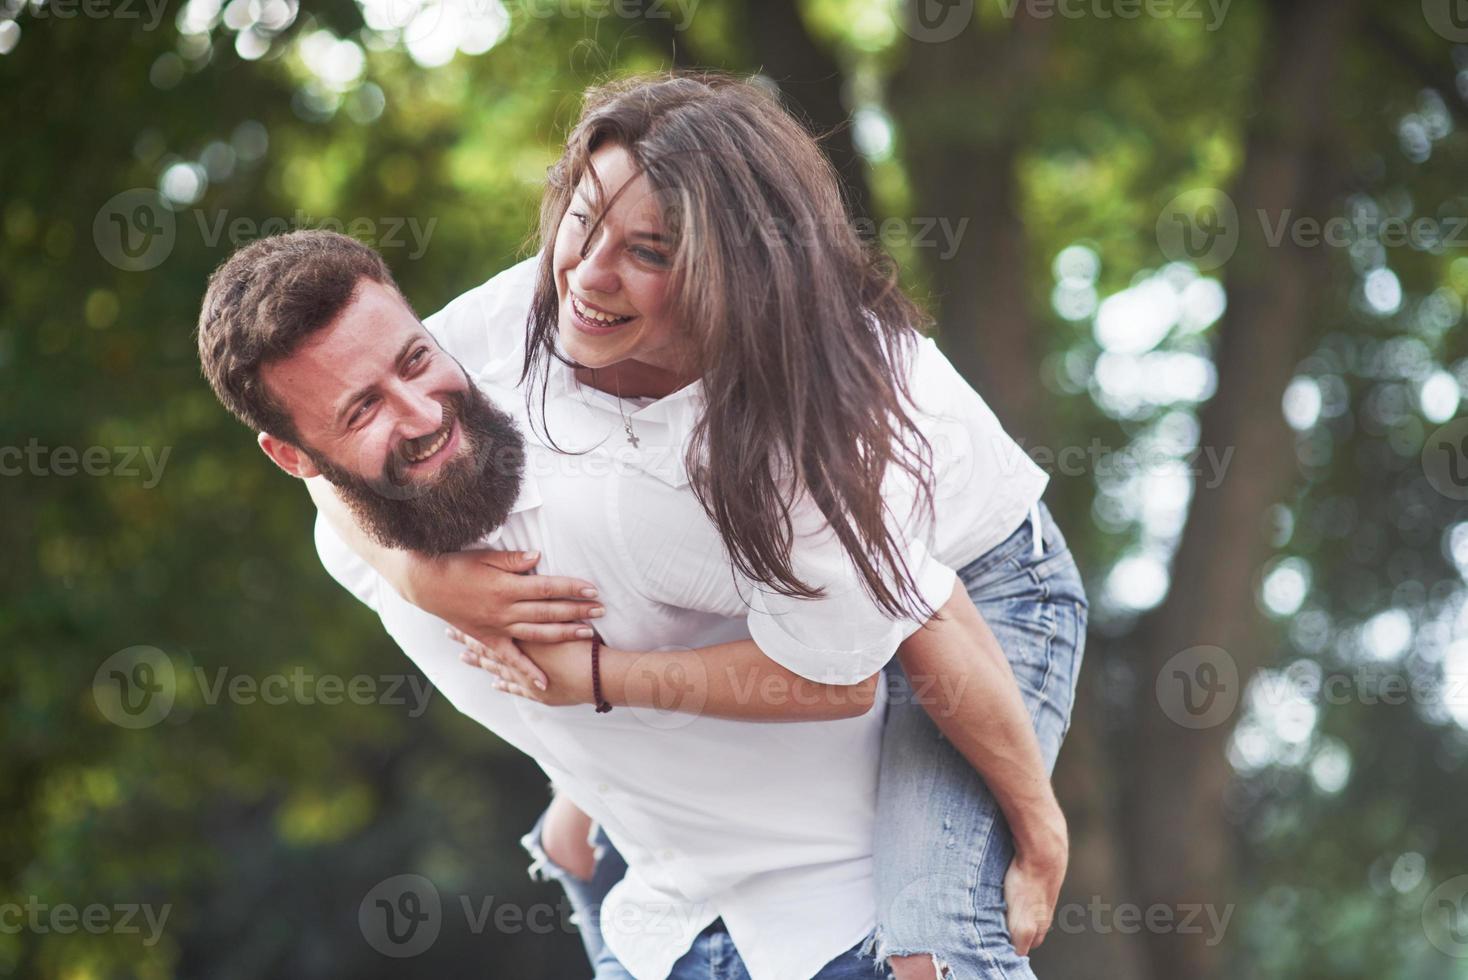 casal romântico enyojing em momentos de felicidade no parque. conceito de estilo de vida amor e ternura foto